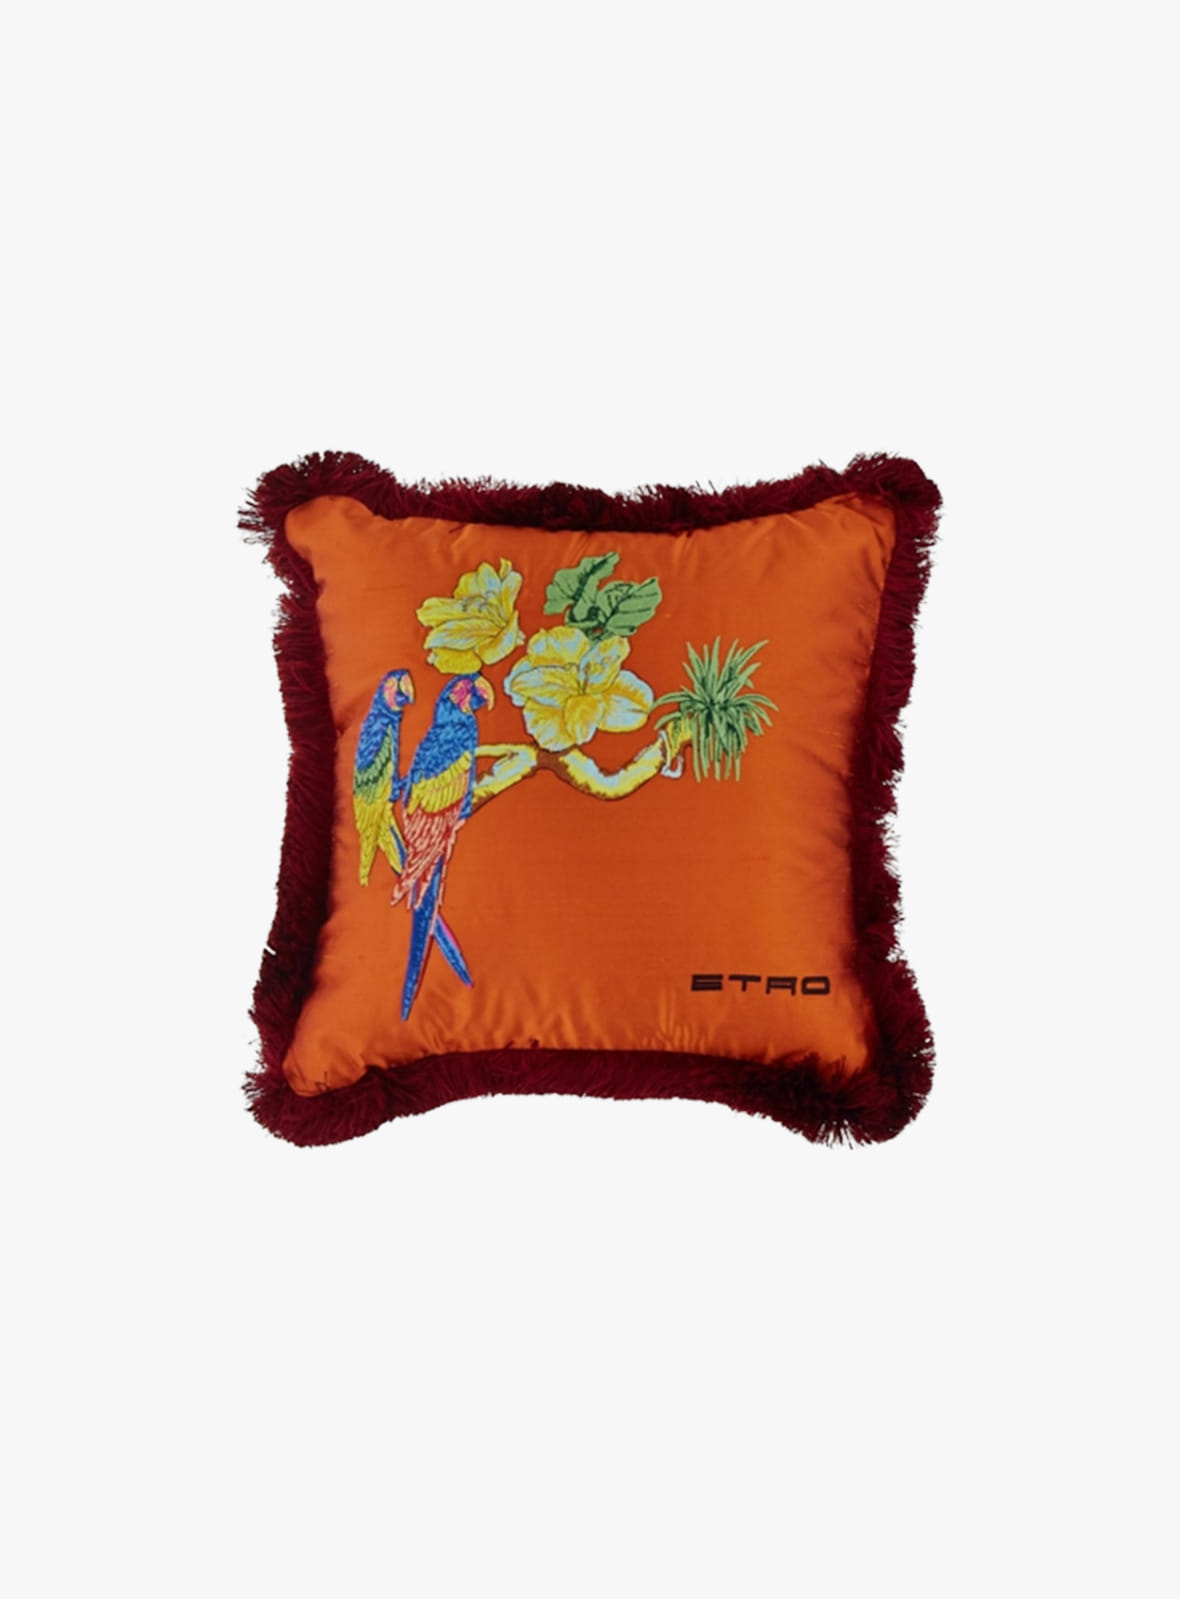 Etro - Etro Bi-color Embroidered Cushion 499559223750